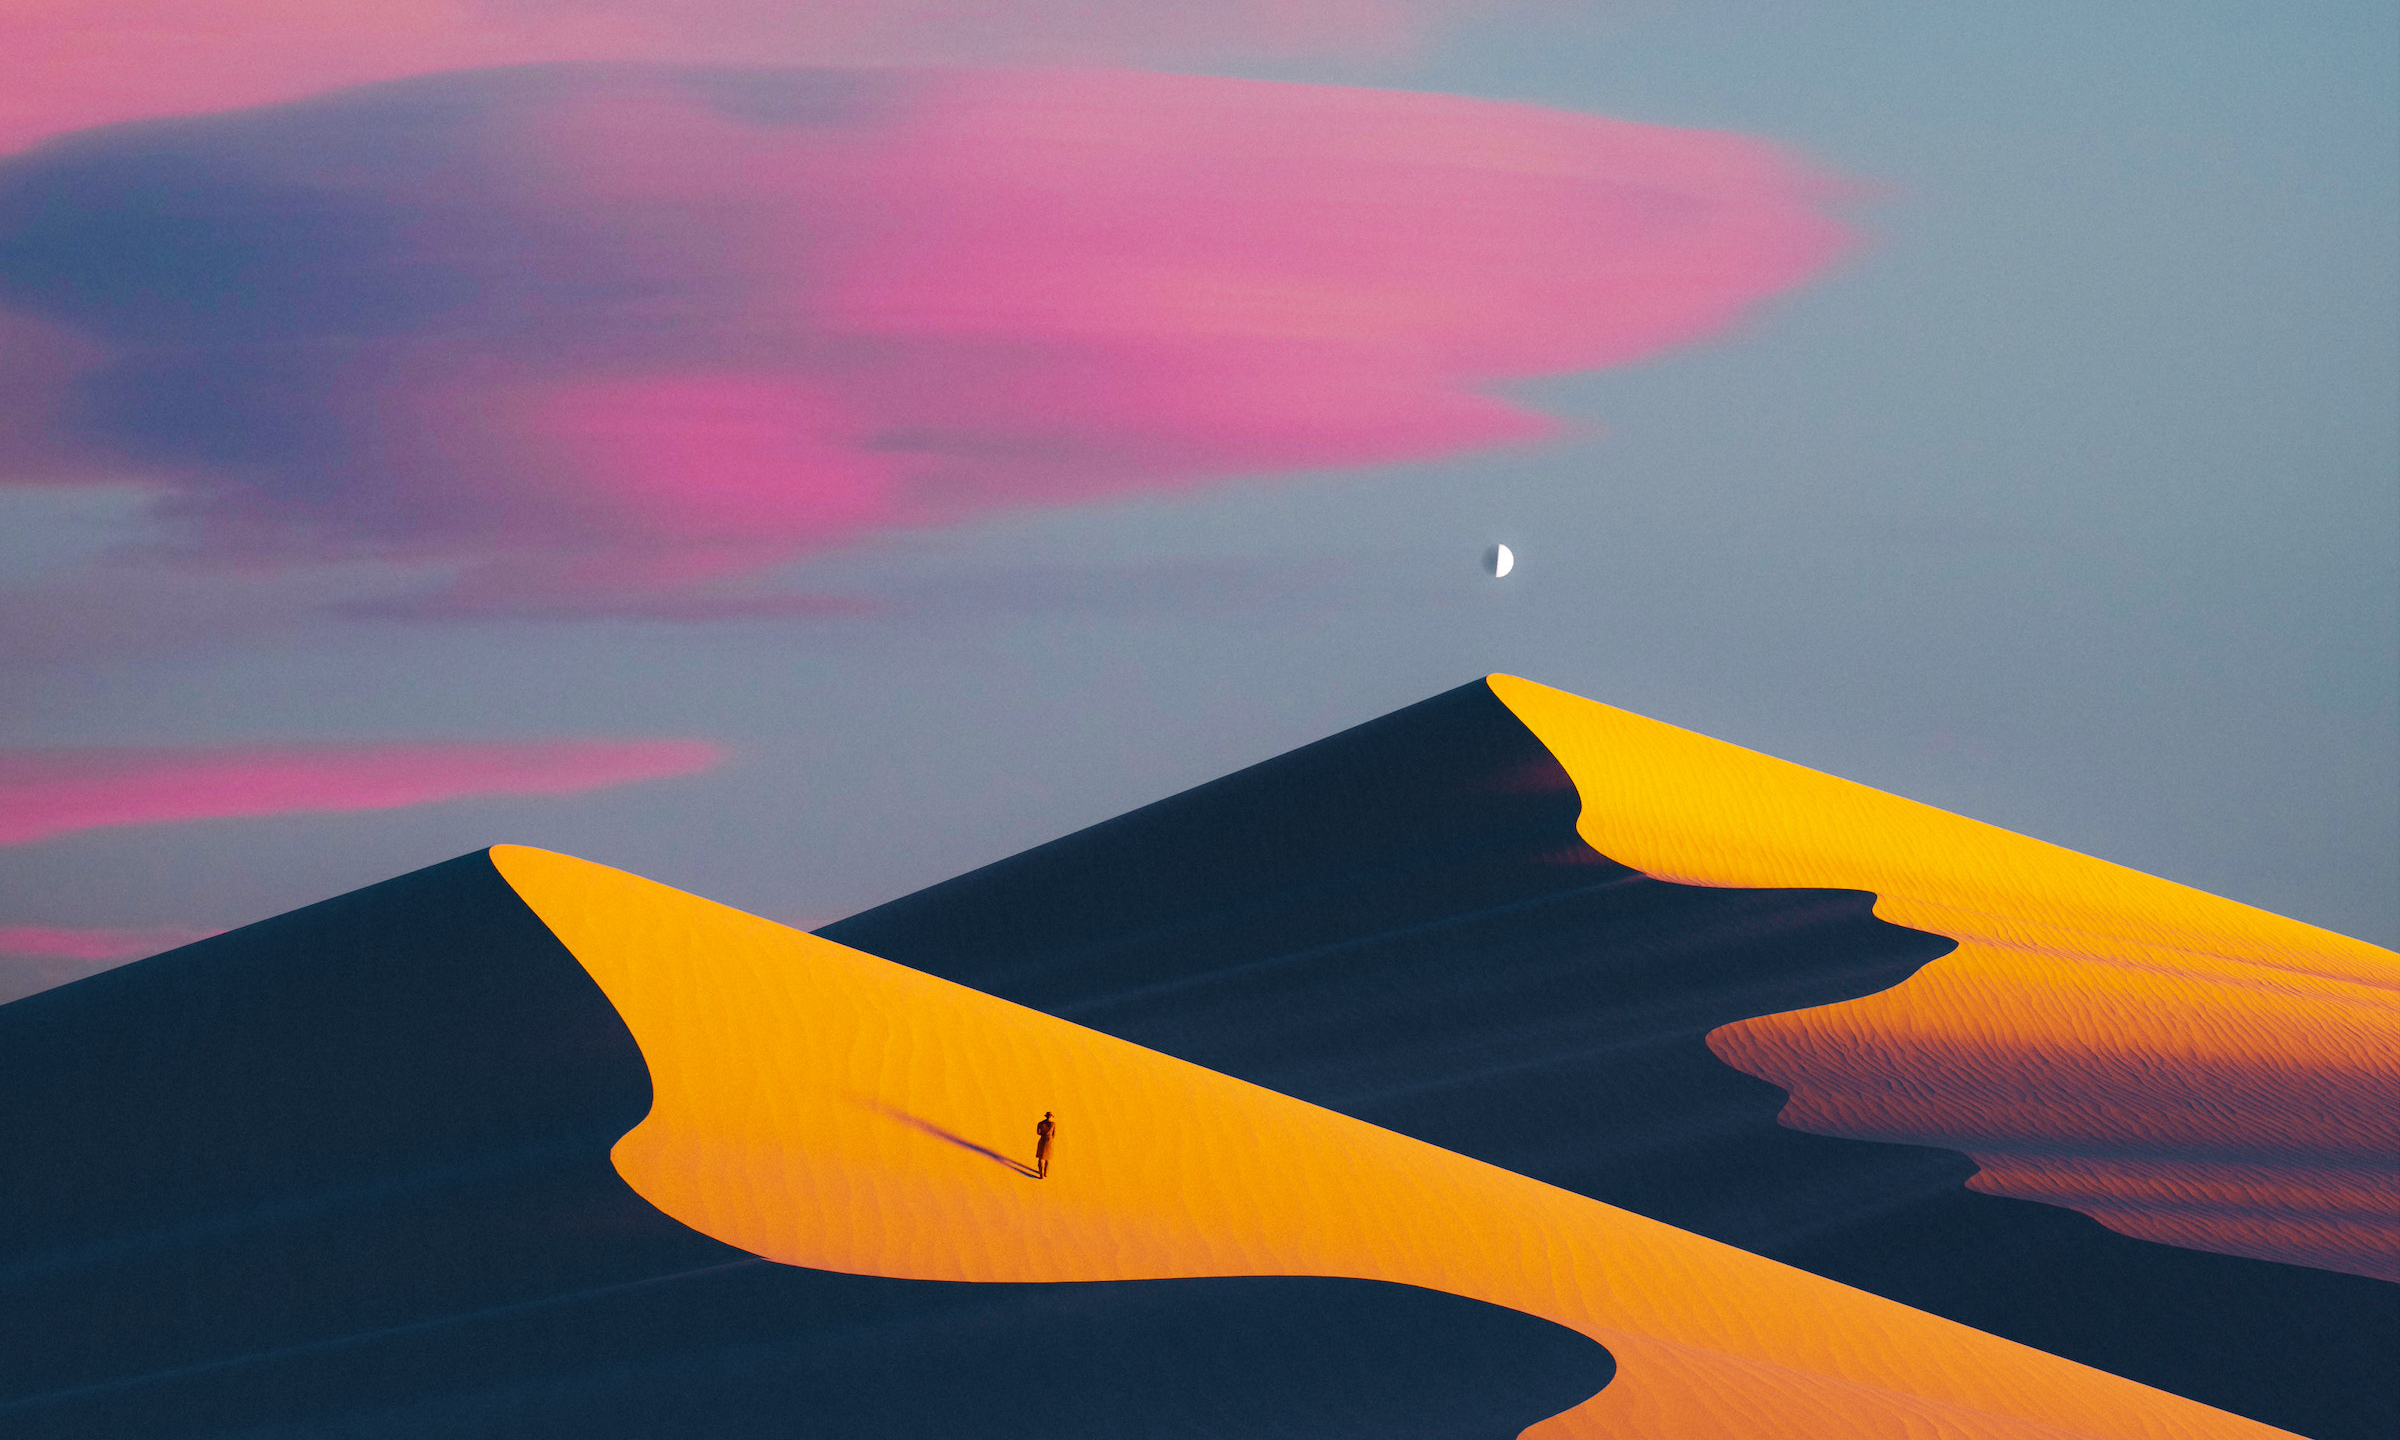 General 2400x1440 digital art artwork illustration dunes desert landscape sand sky clouds sunlight Moon simple background minimalism